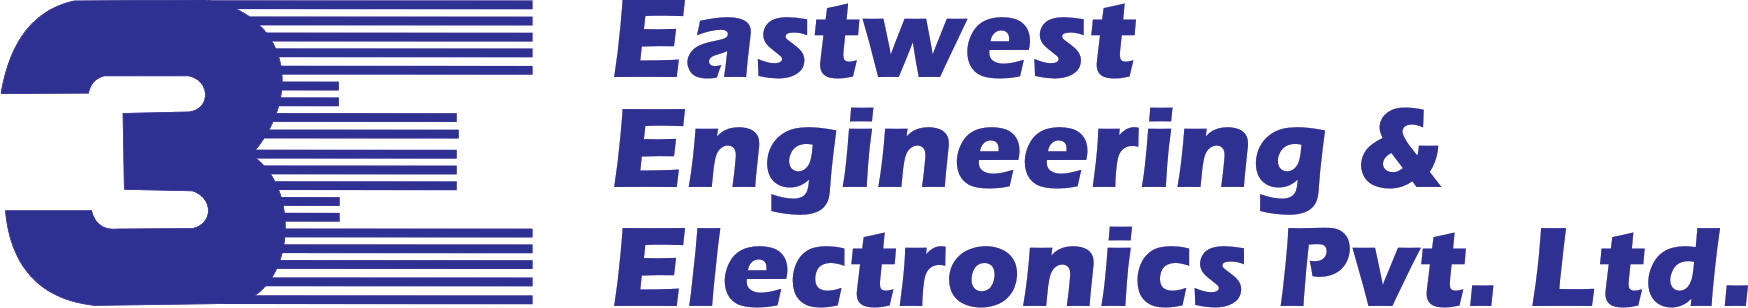 EASTWEST ENGINEERING & ELECTRONICS CO